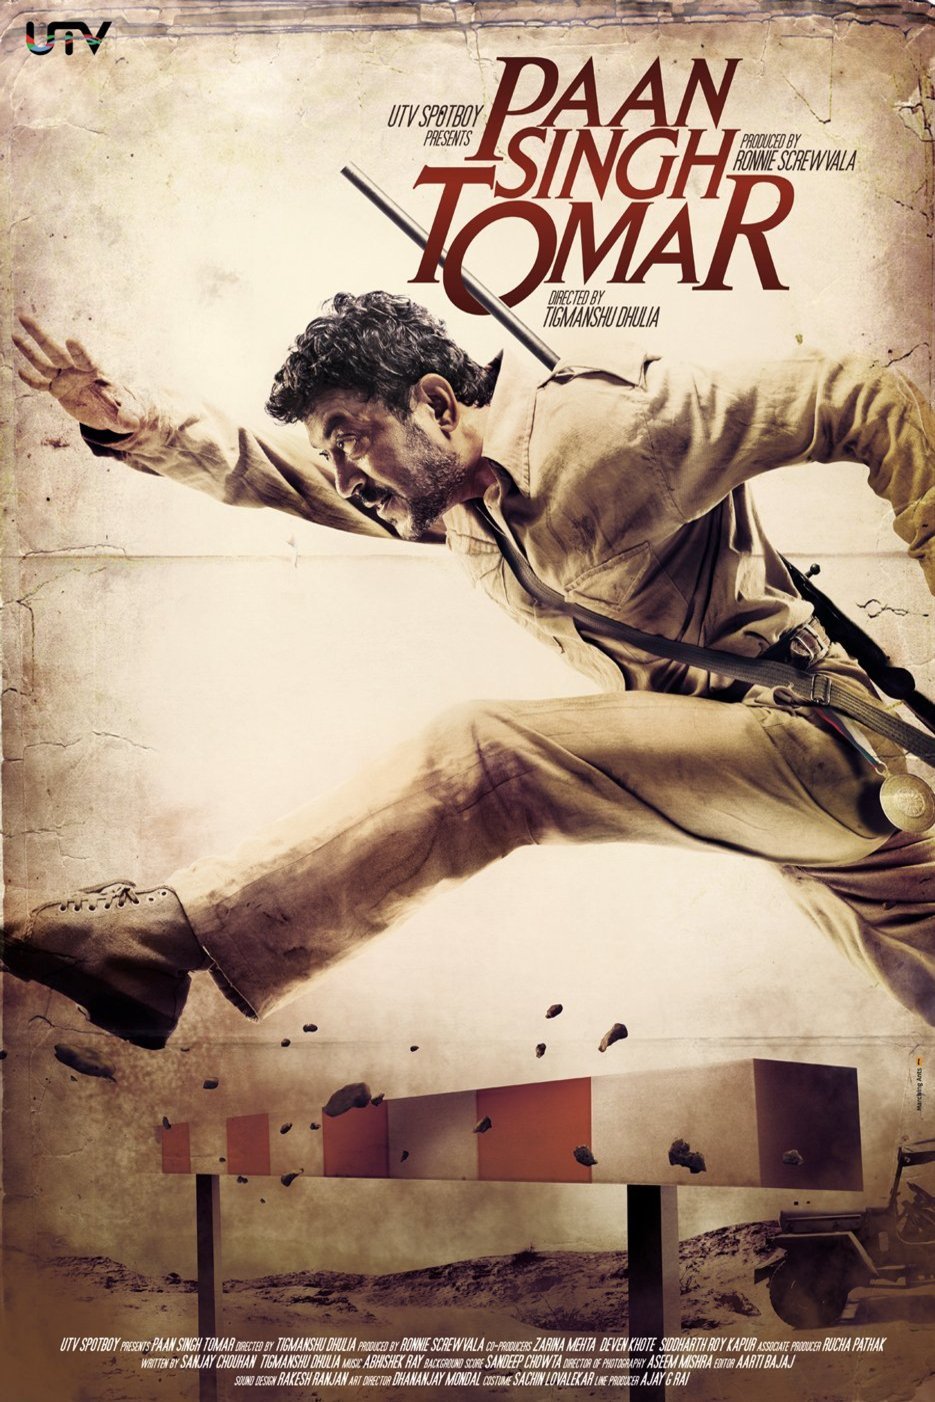 Hindi poster of the movie Paan Singh Tomar